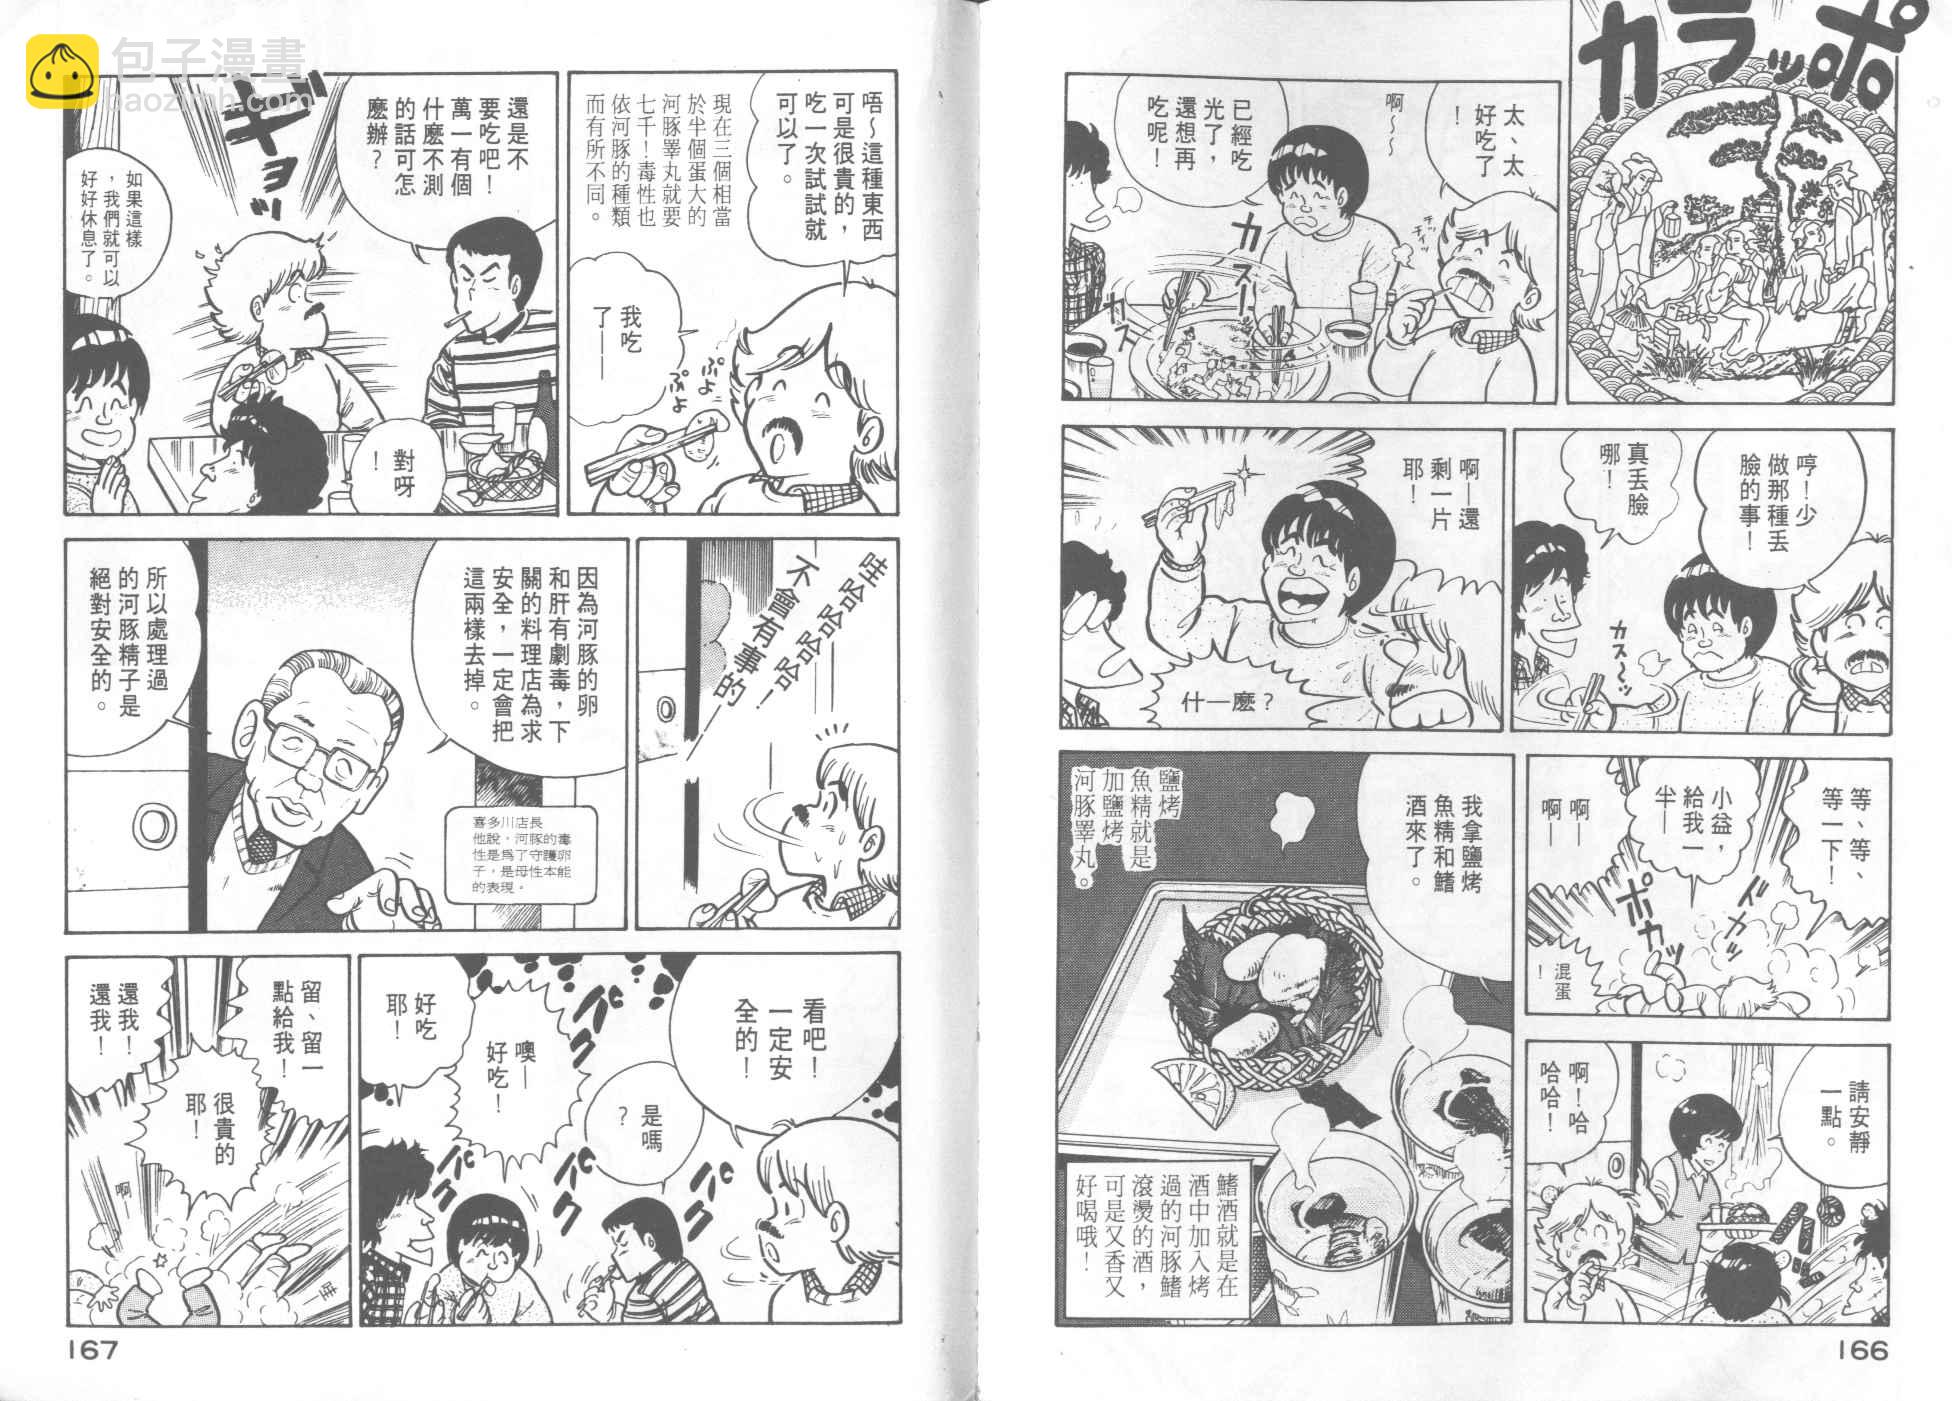 妙廚老爹 - 第6卷(2/2) - 4